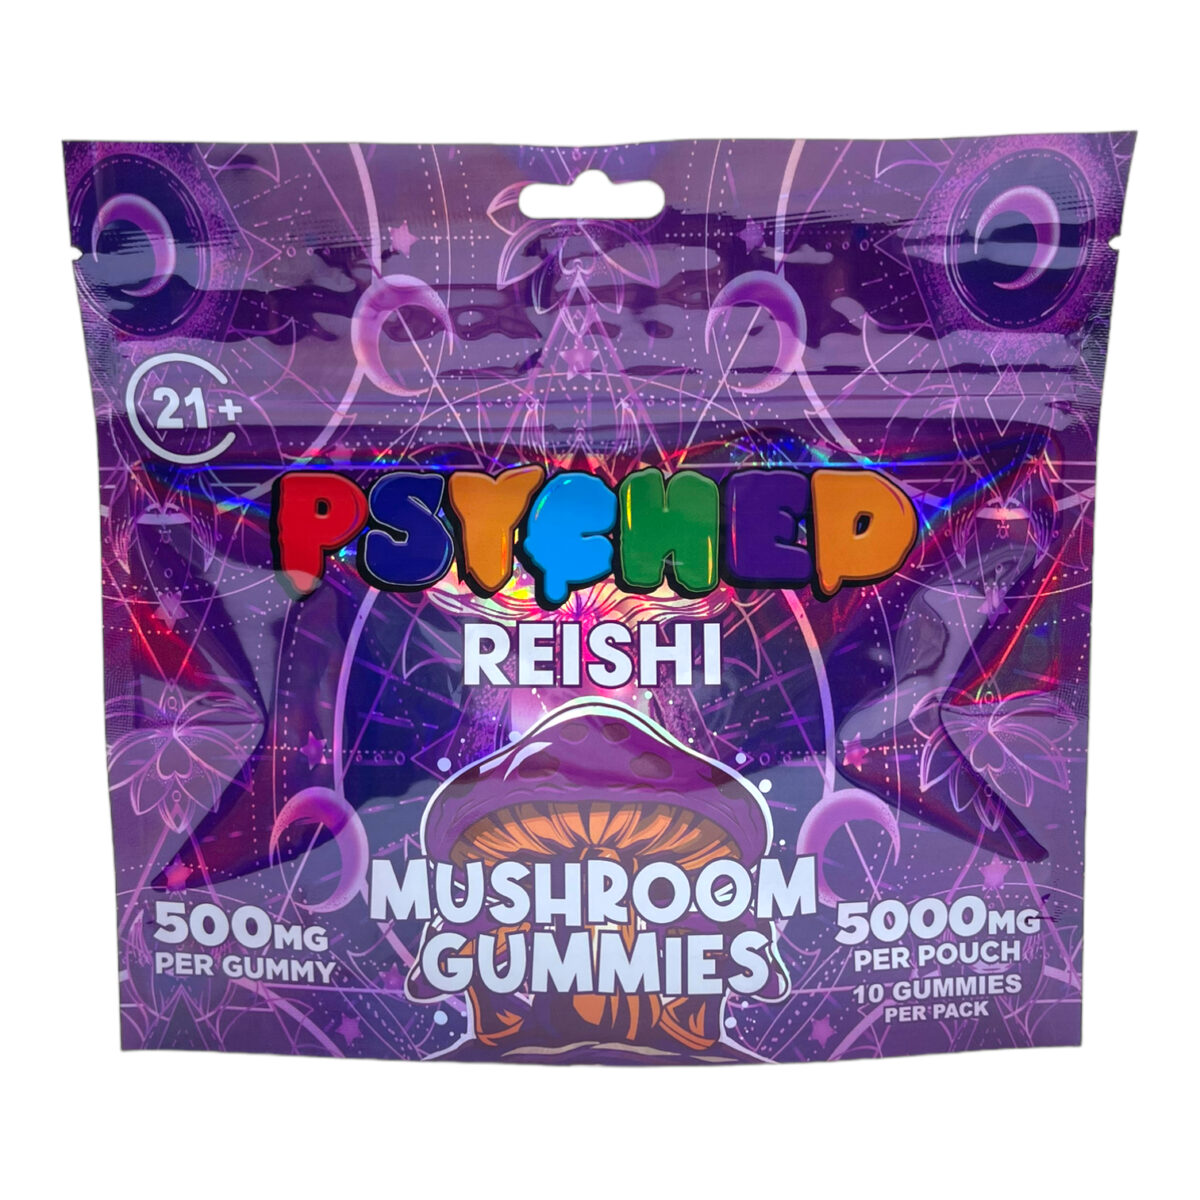 Psyched Reishi Mushroom Gummies – 500mg